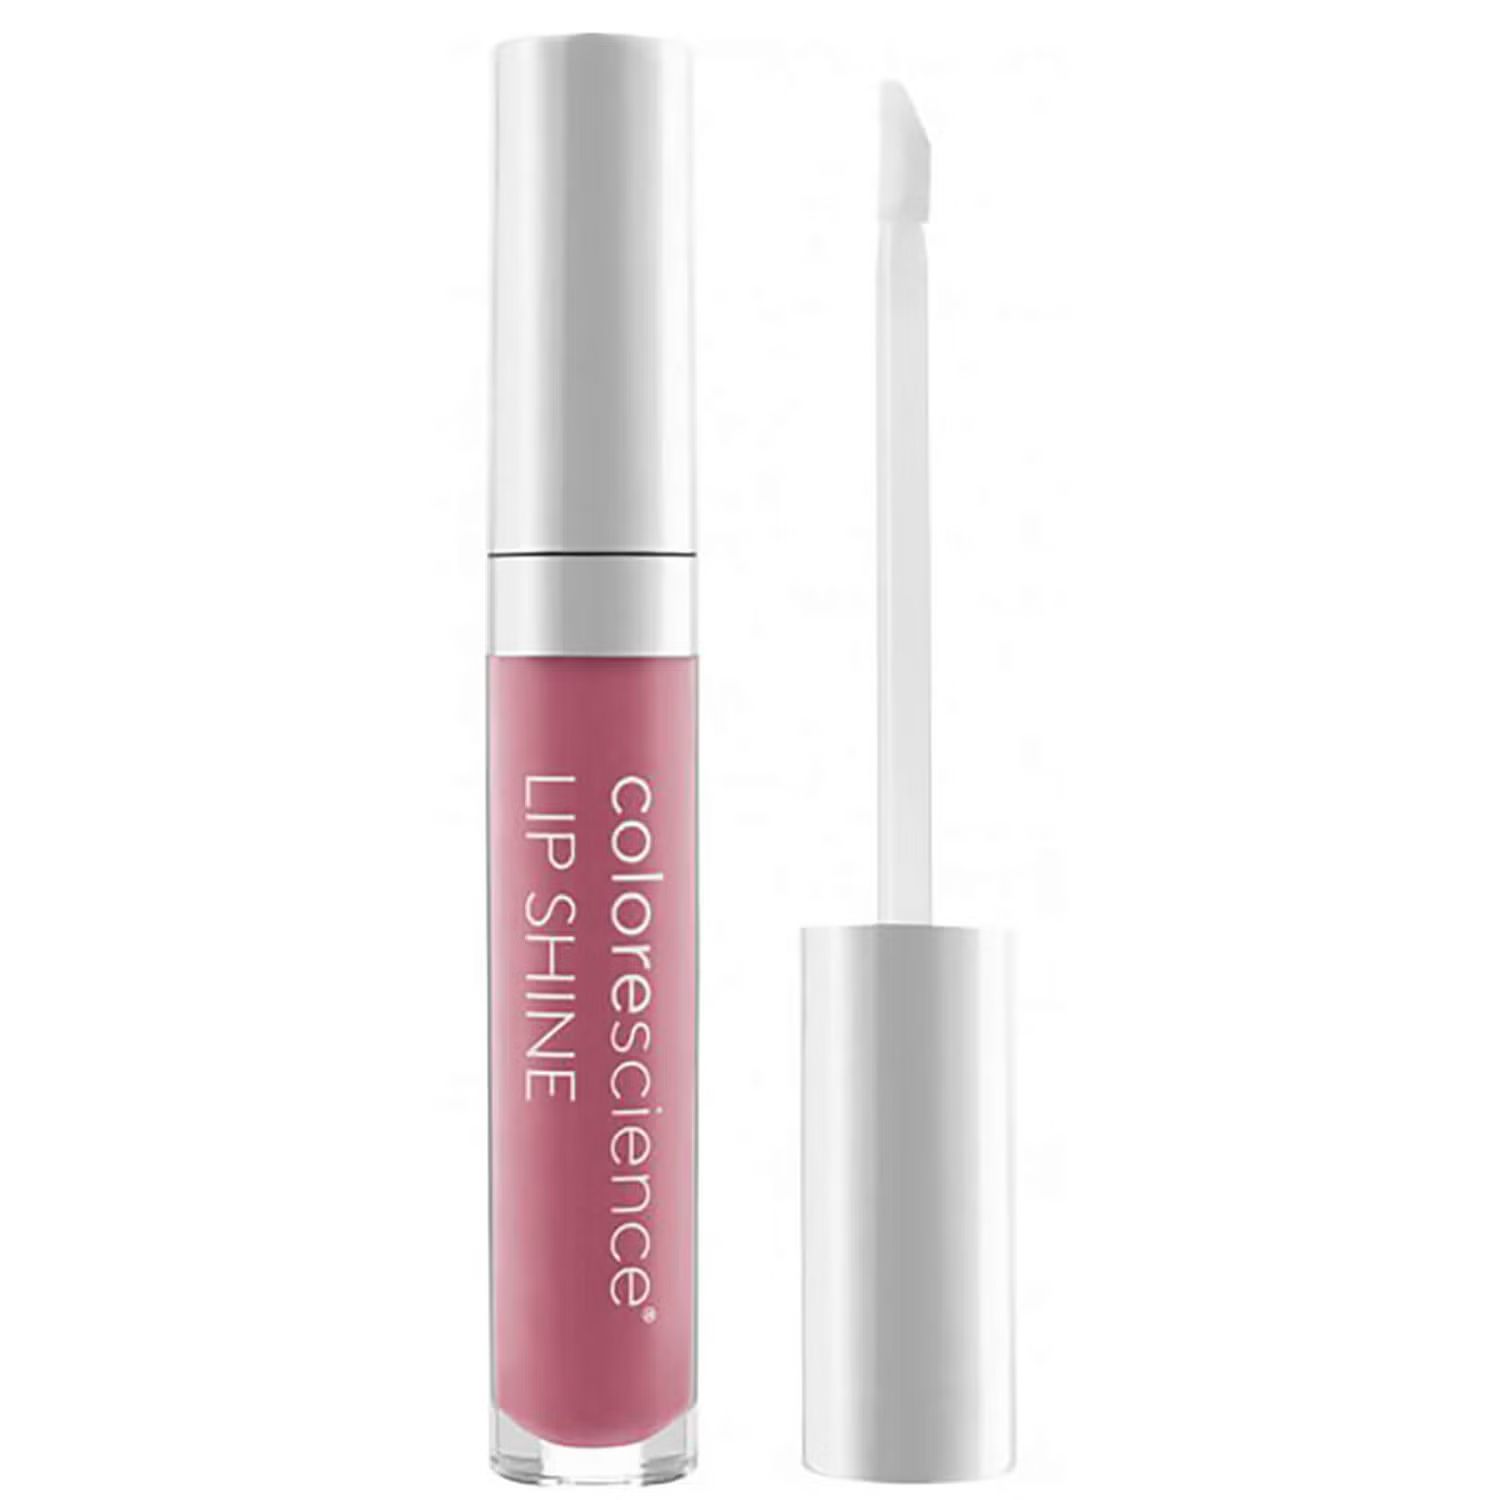 Colorescience Sunforgettable® Lip Shine SPF 35 (0.12 fl oz) - Various Shades | Skinstore